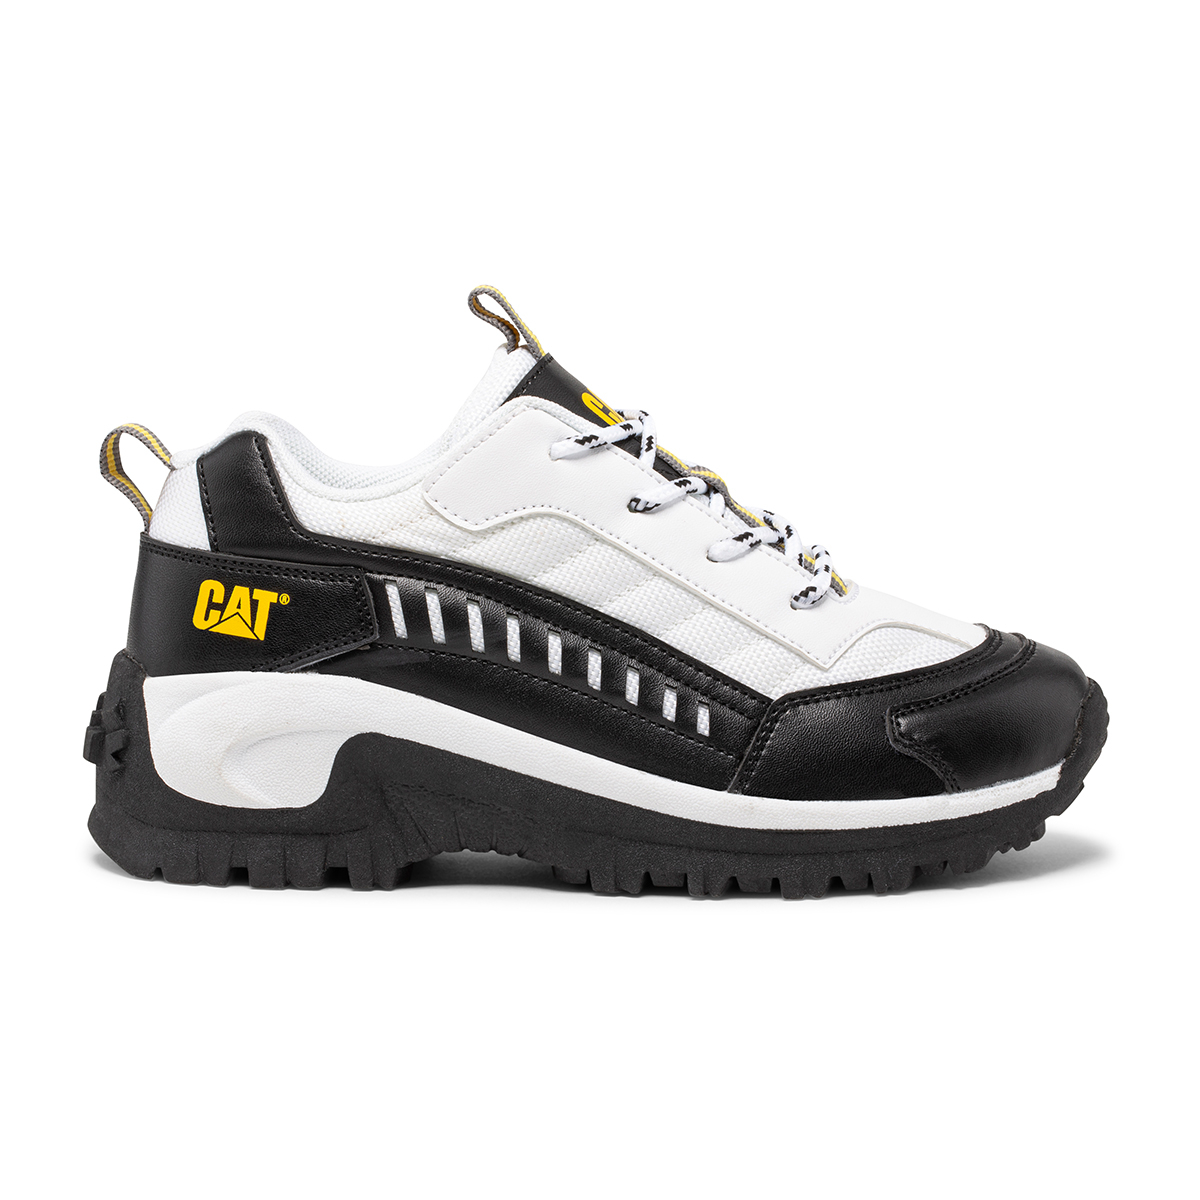 Caterpillar Sneakers Dubai - Caterpillar Intruder Kids - White/Black HGBQKU473